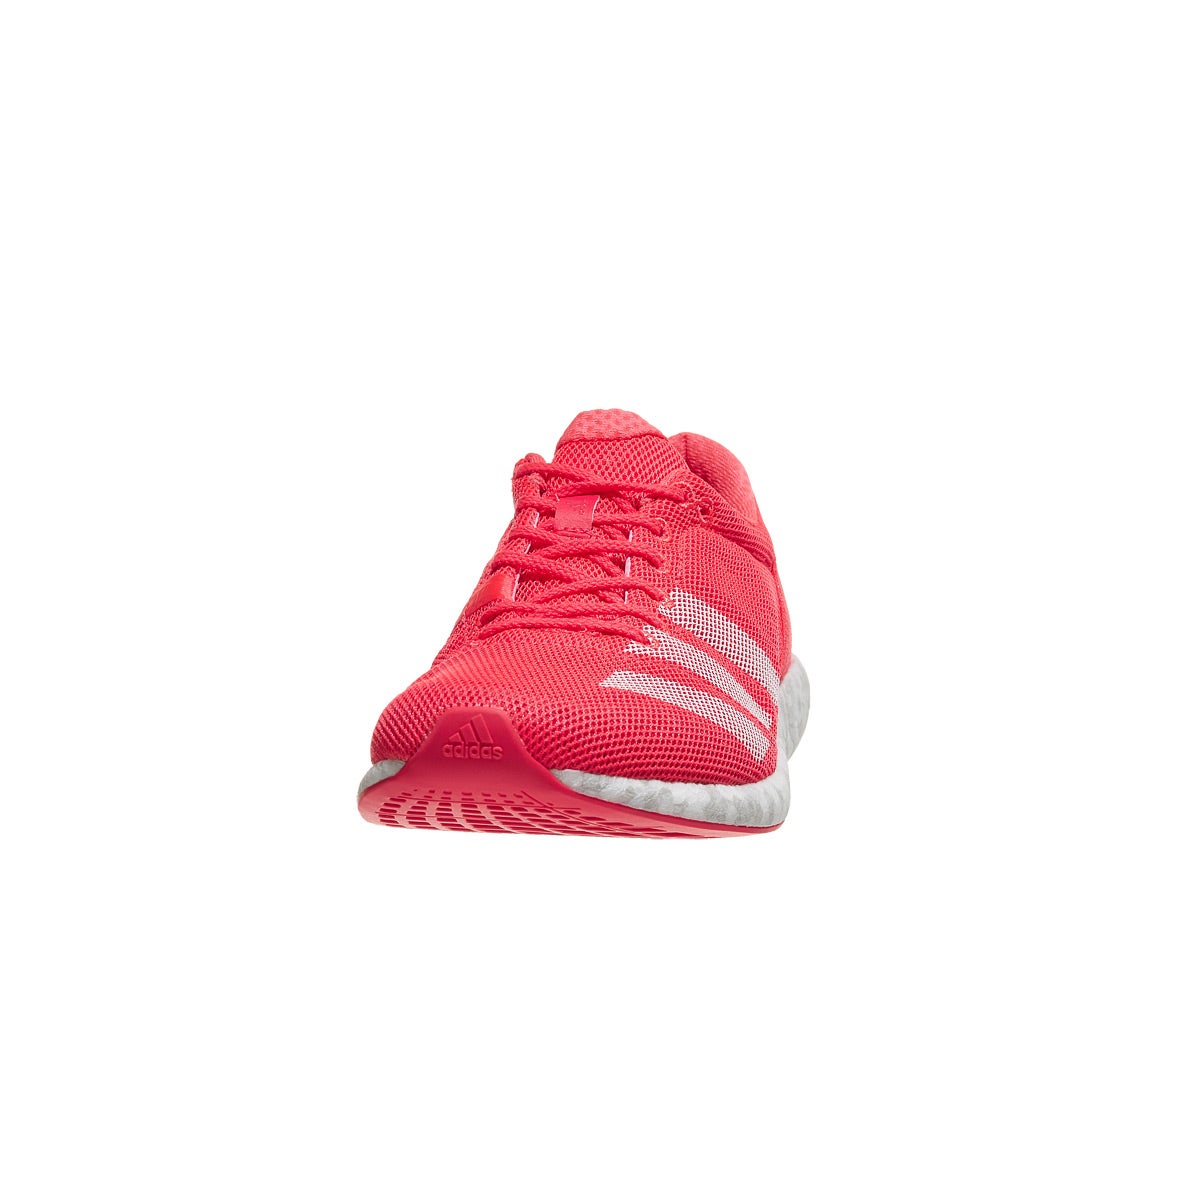 adidas adizero Sub 2 Unisex Shoes Red 